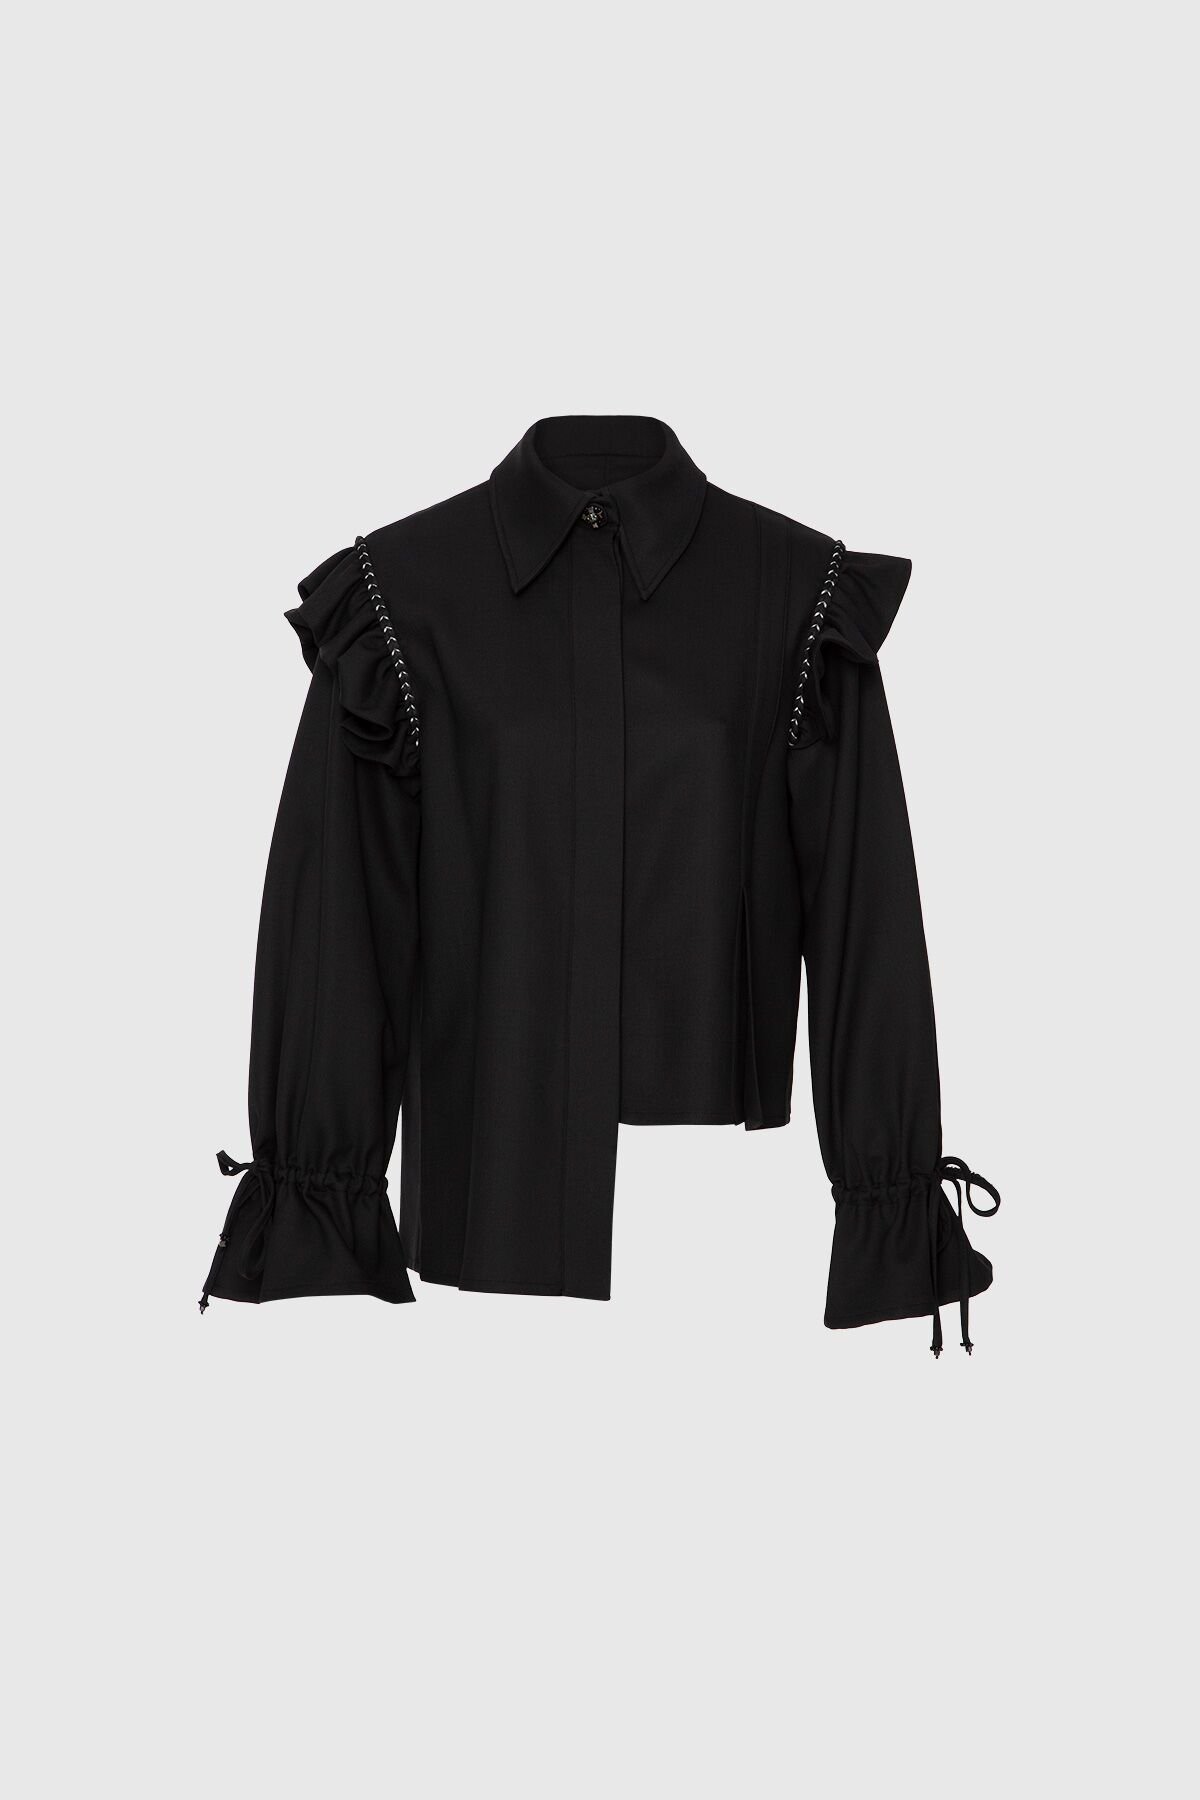 Asymmetrical Cut Black Shirt with Flywheel Detail on the Sleeves